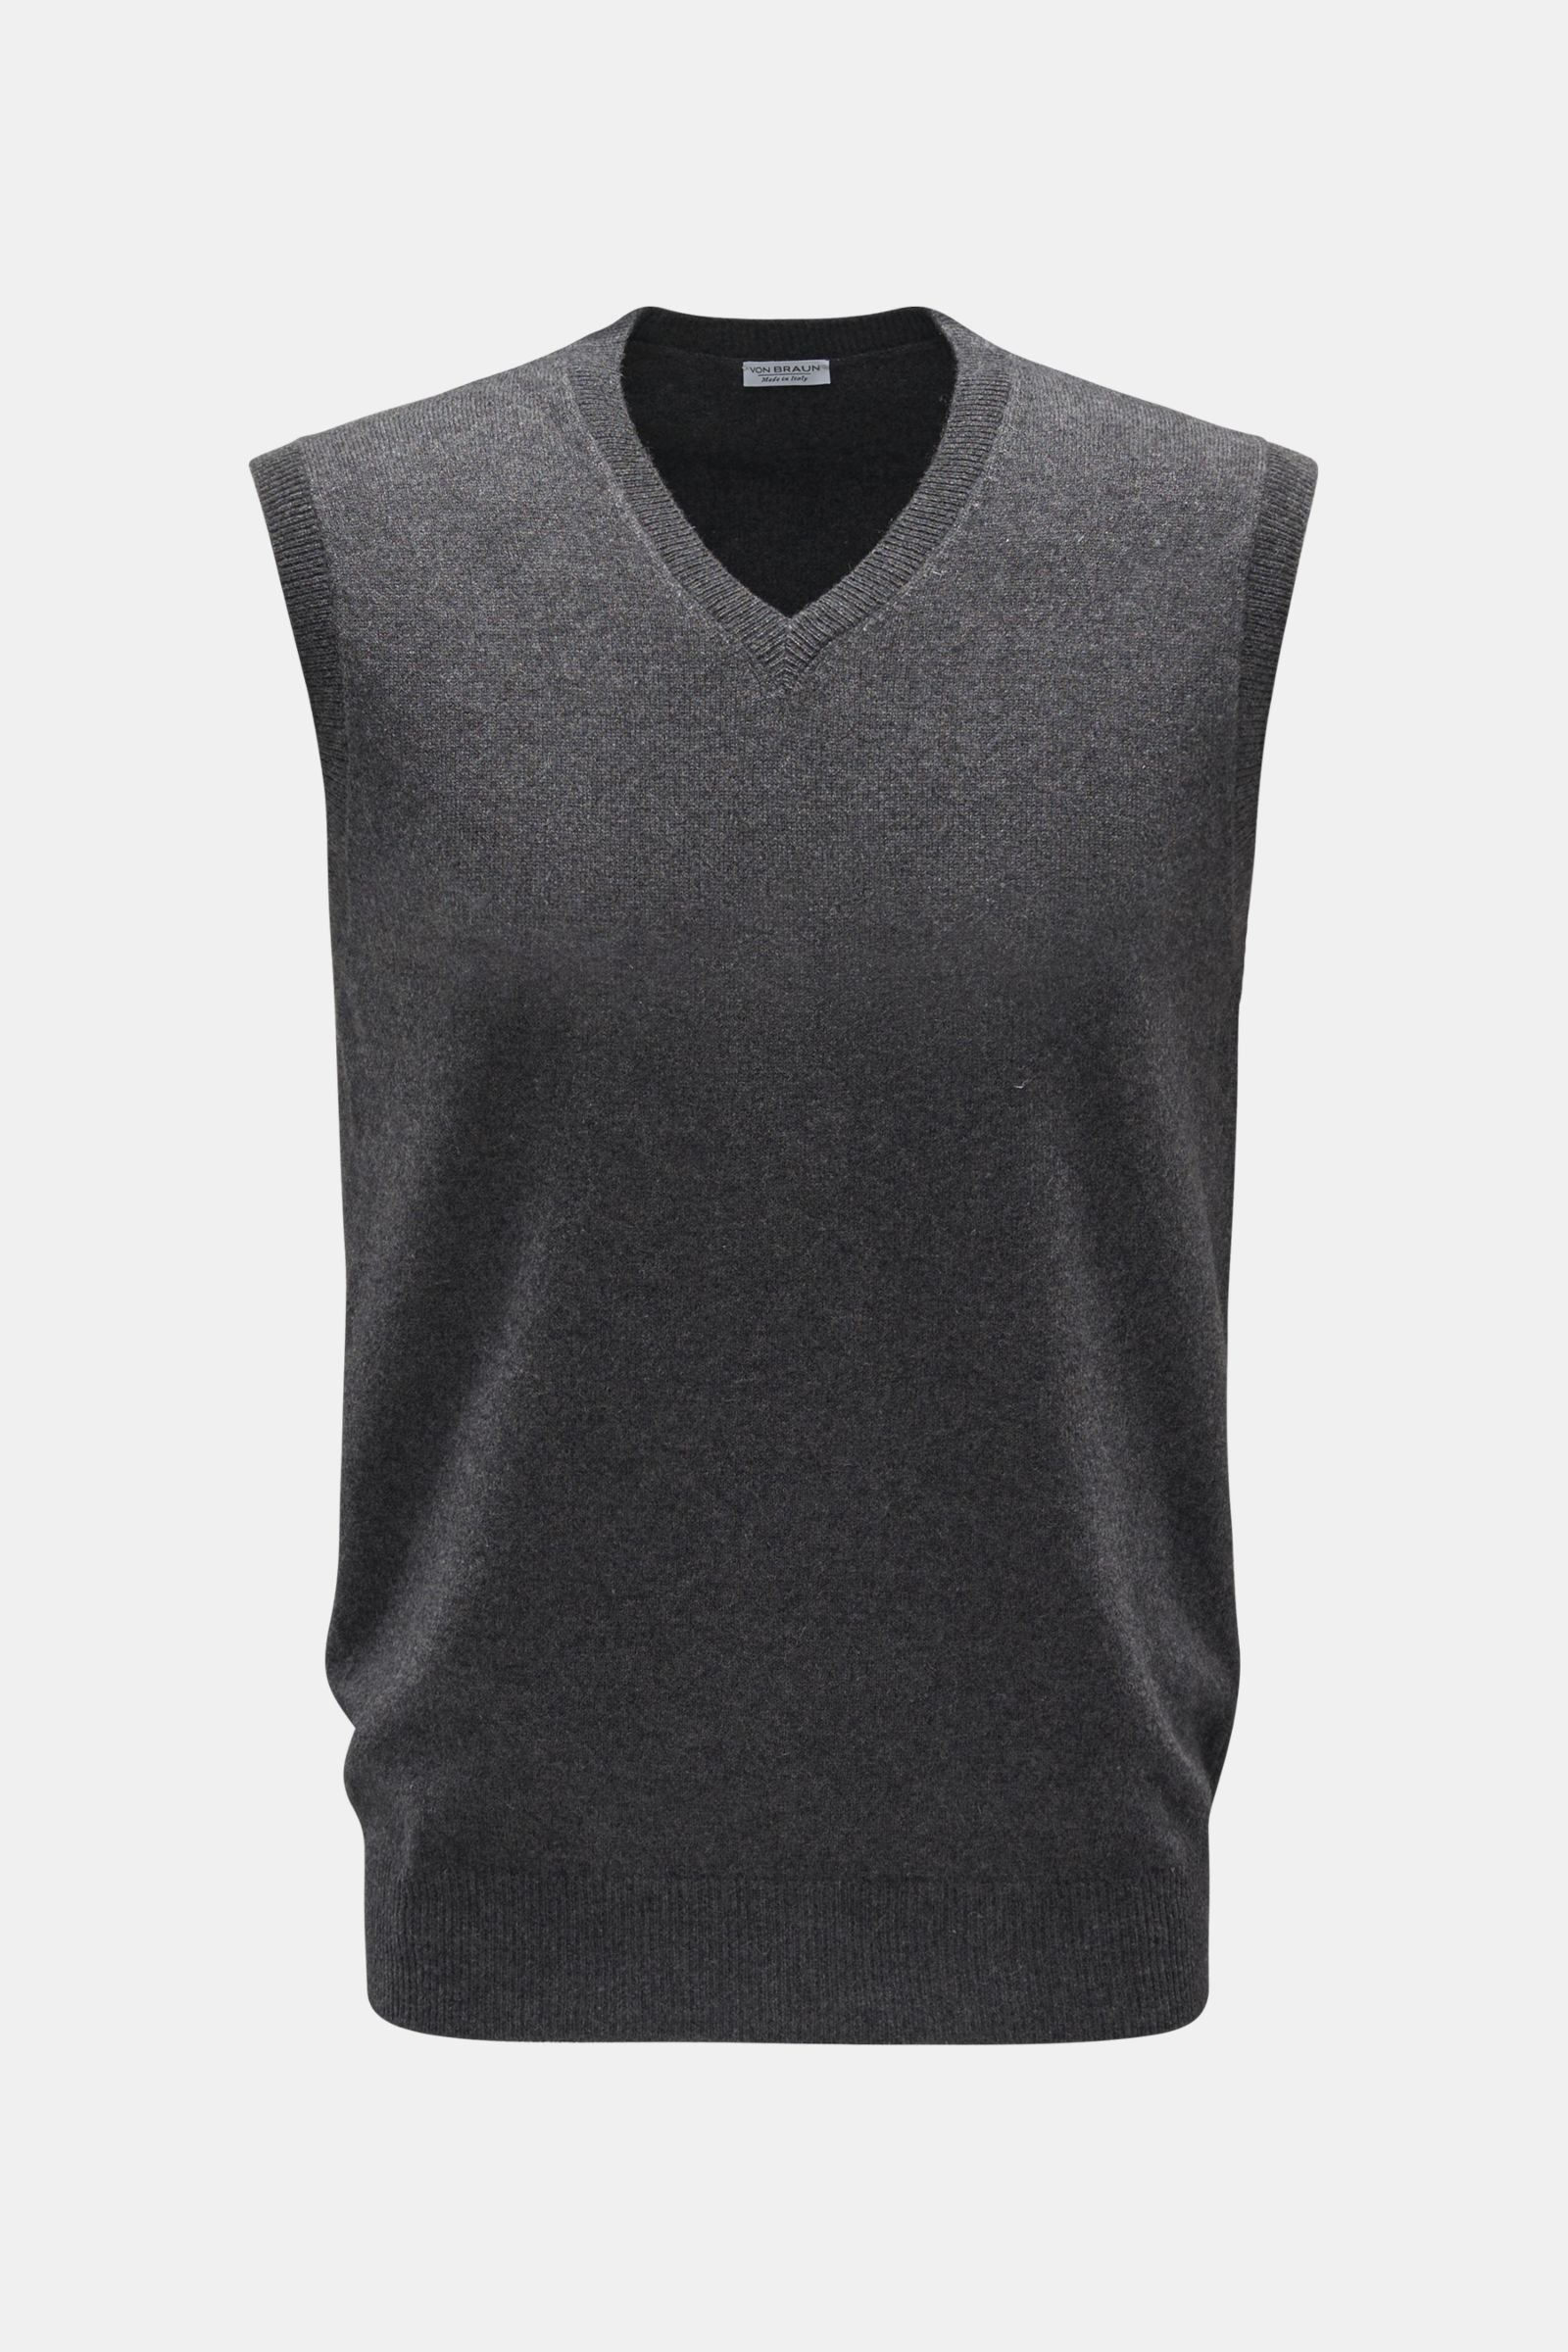 Cashmere V-neck sweater vest anthracite 